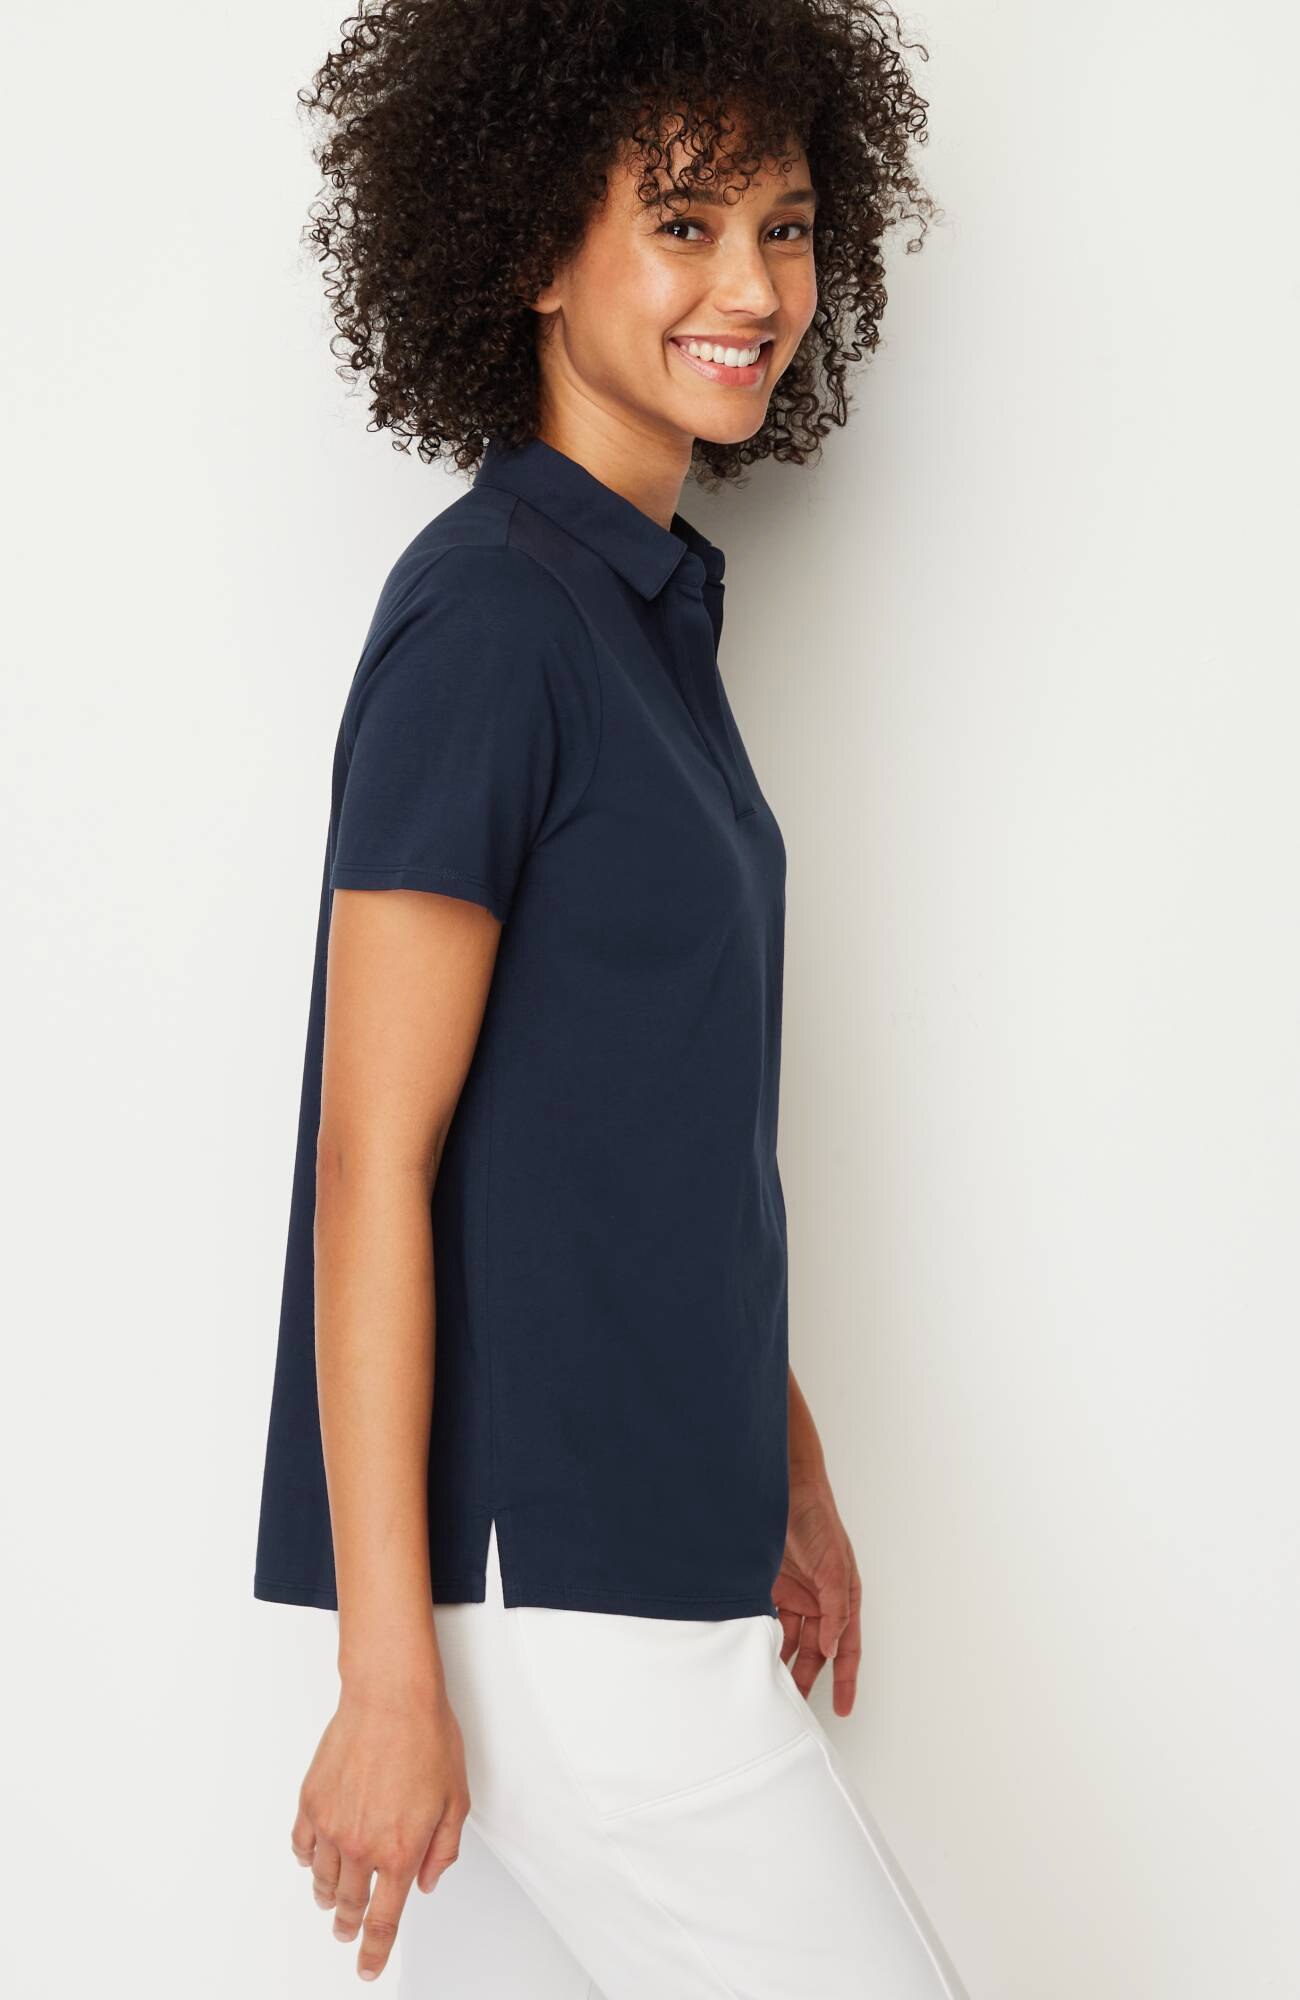 Fit Cotton-Stretch Polo Shirt